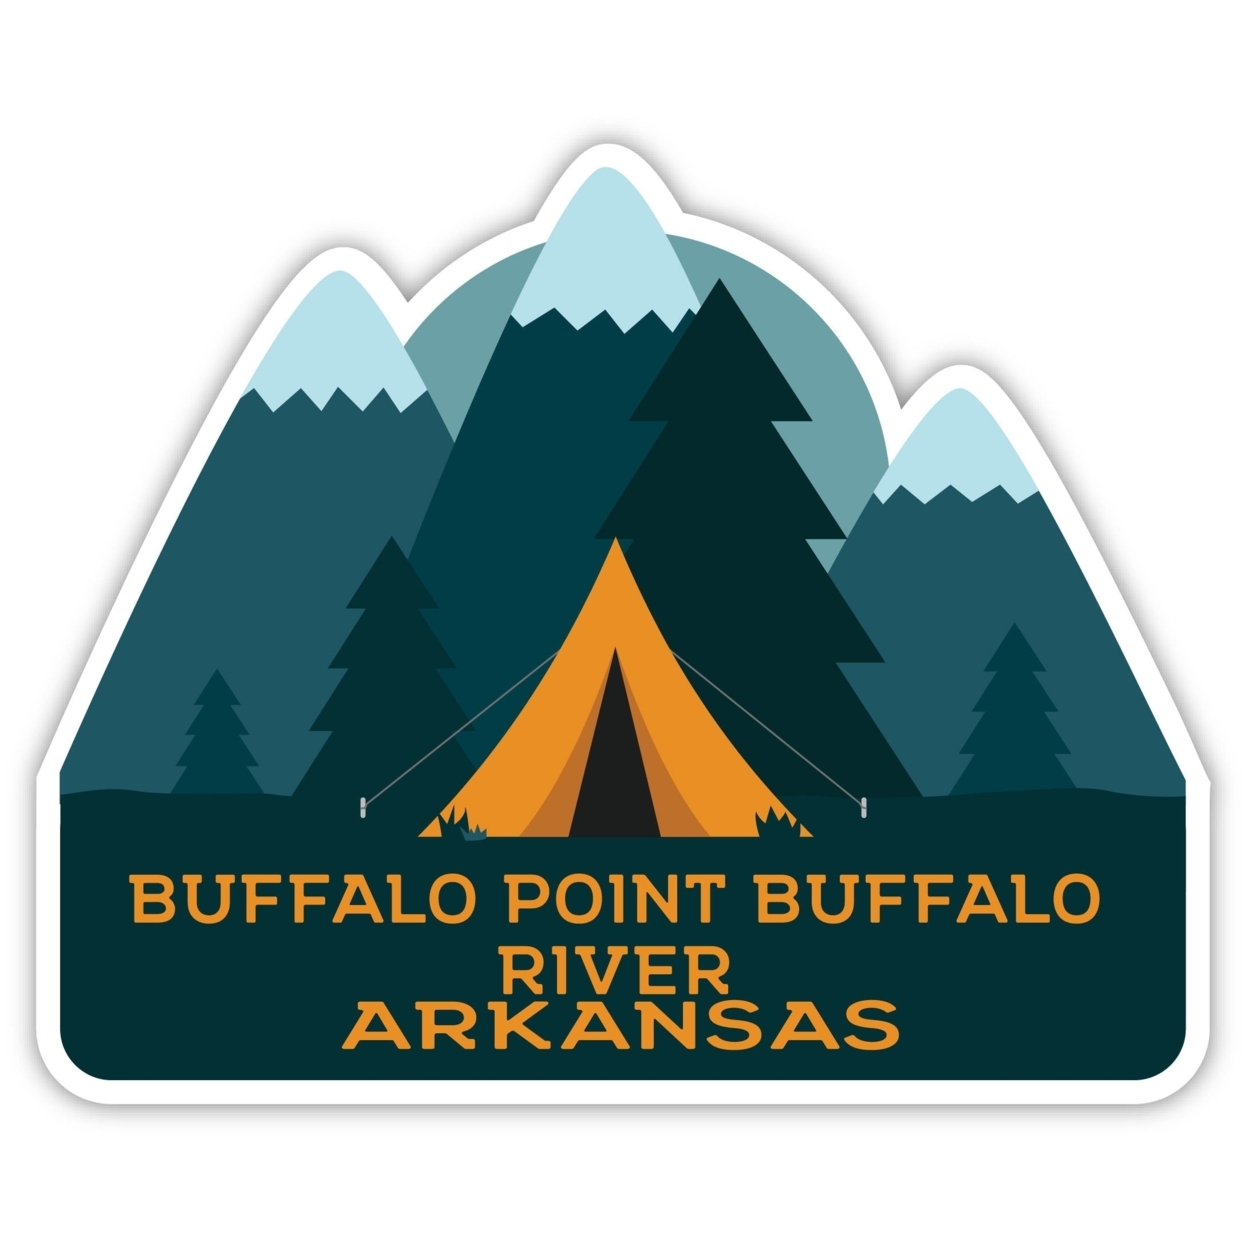 Buffalo Point Buffalo River Arkansas Souvenir Decorative Stickers (Choose Theme And Size) - 4-Pack, 8-Inch, Camp Life